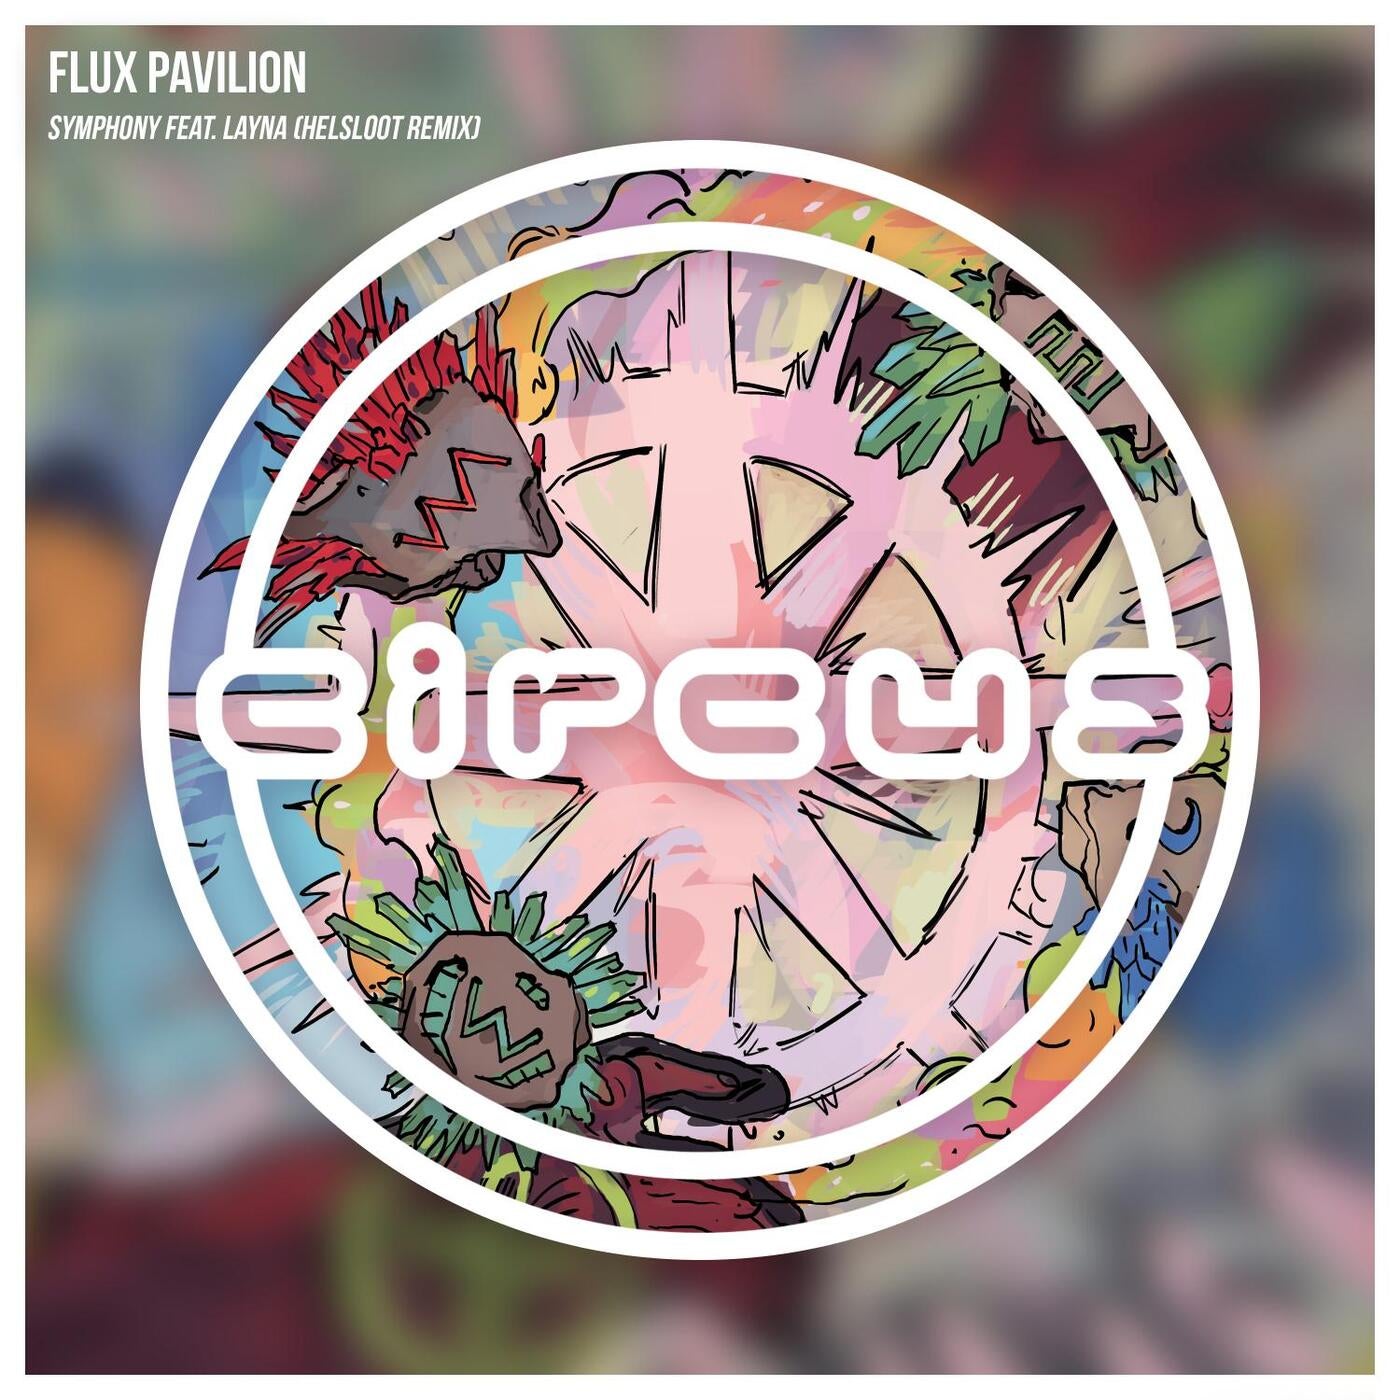 Flux Pavilion feat. Layna – Symphony (Helsloot Remix)